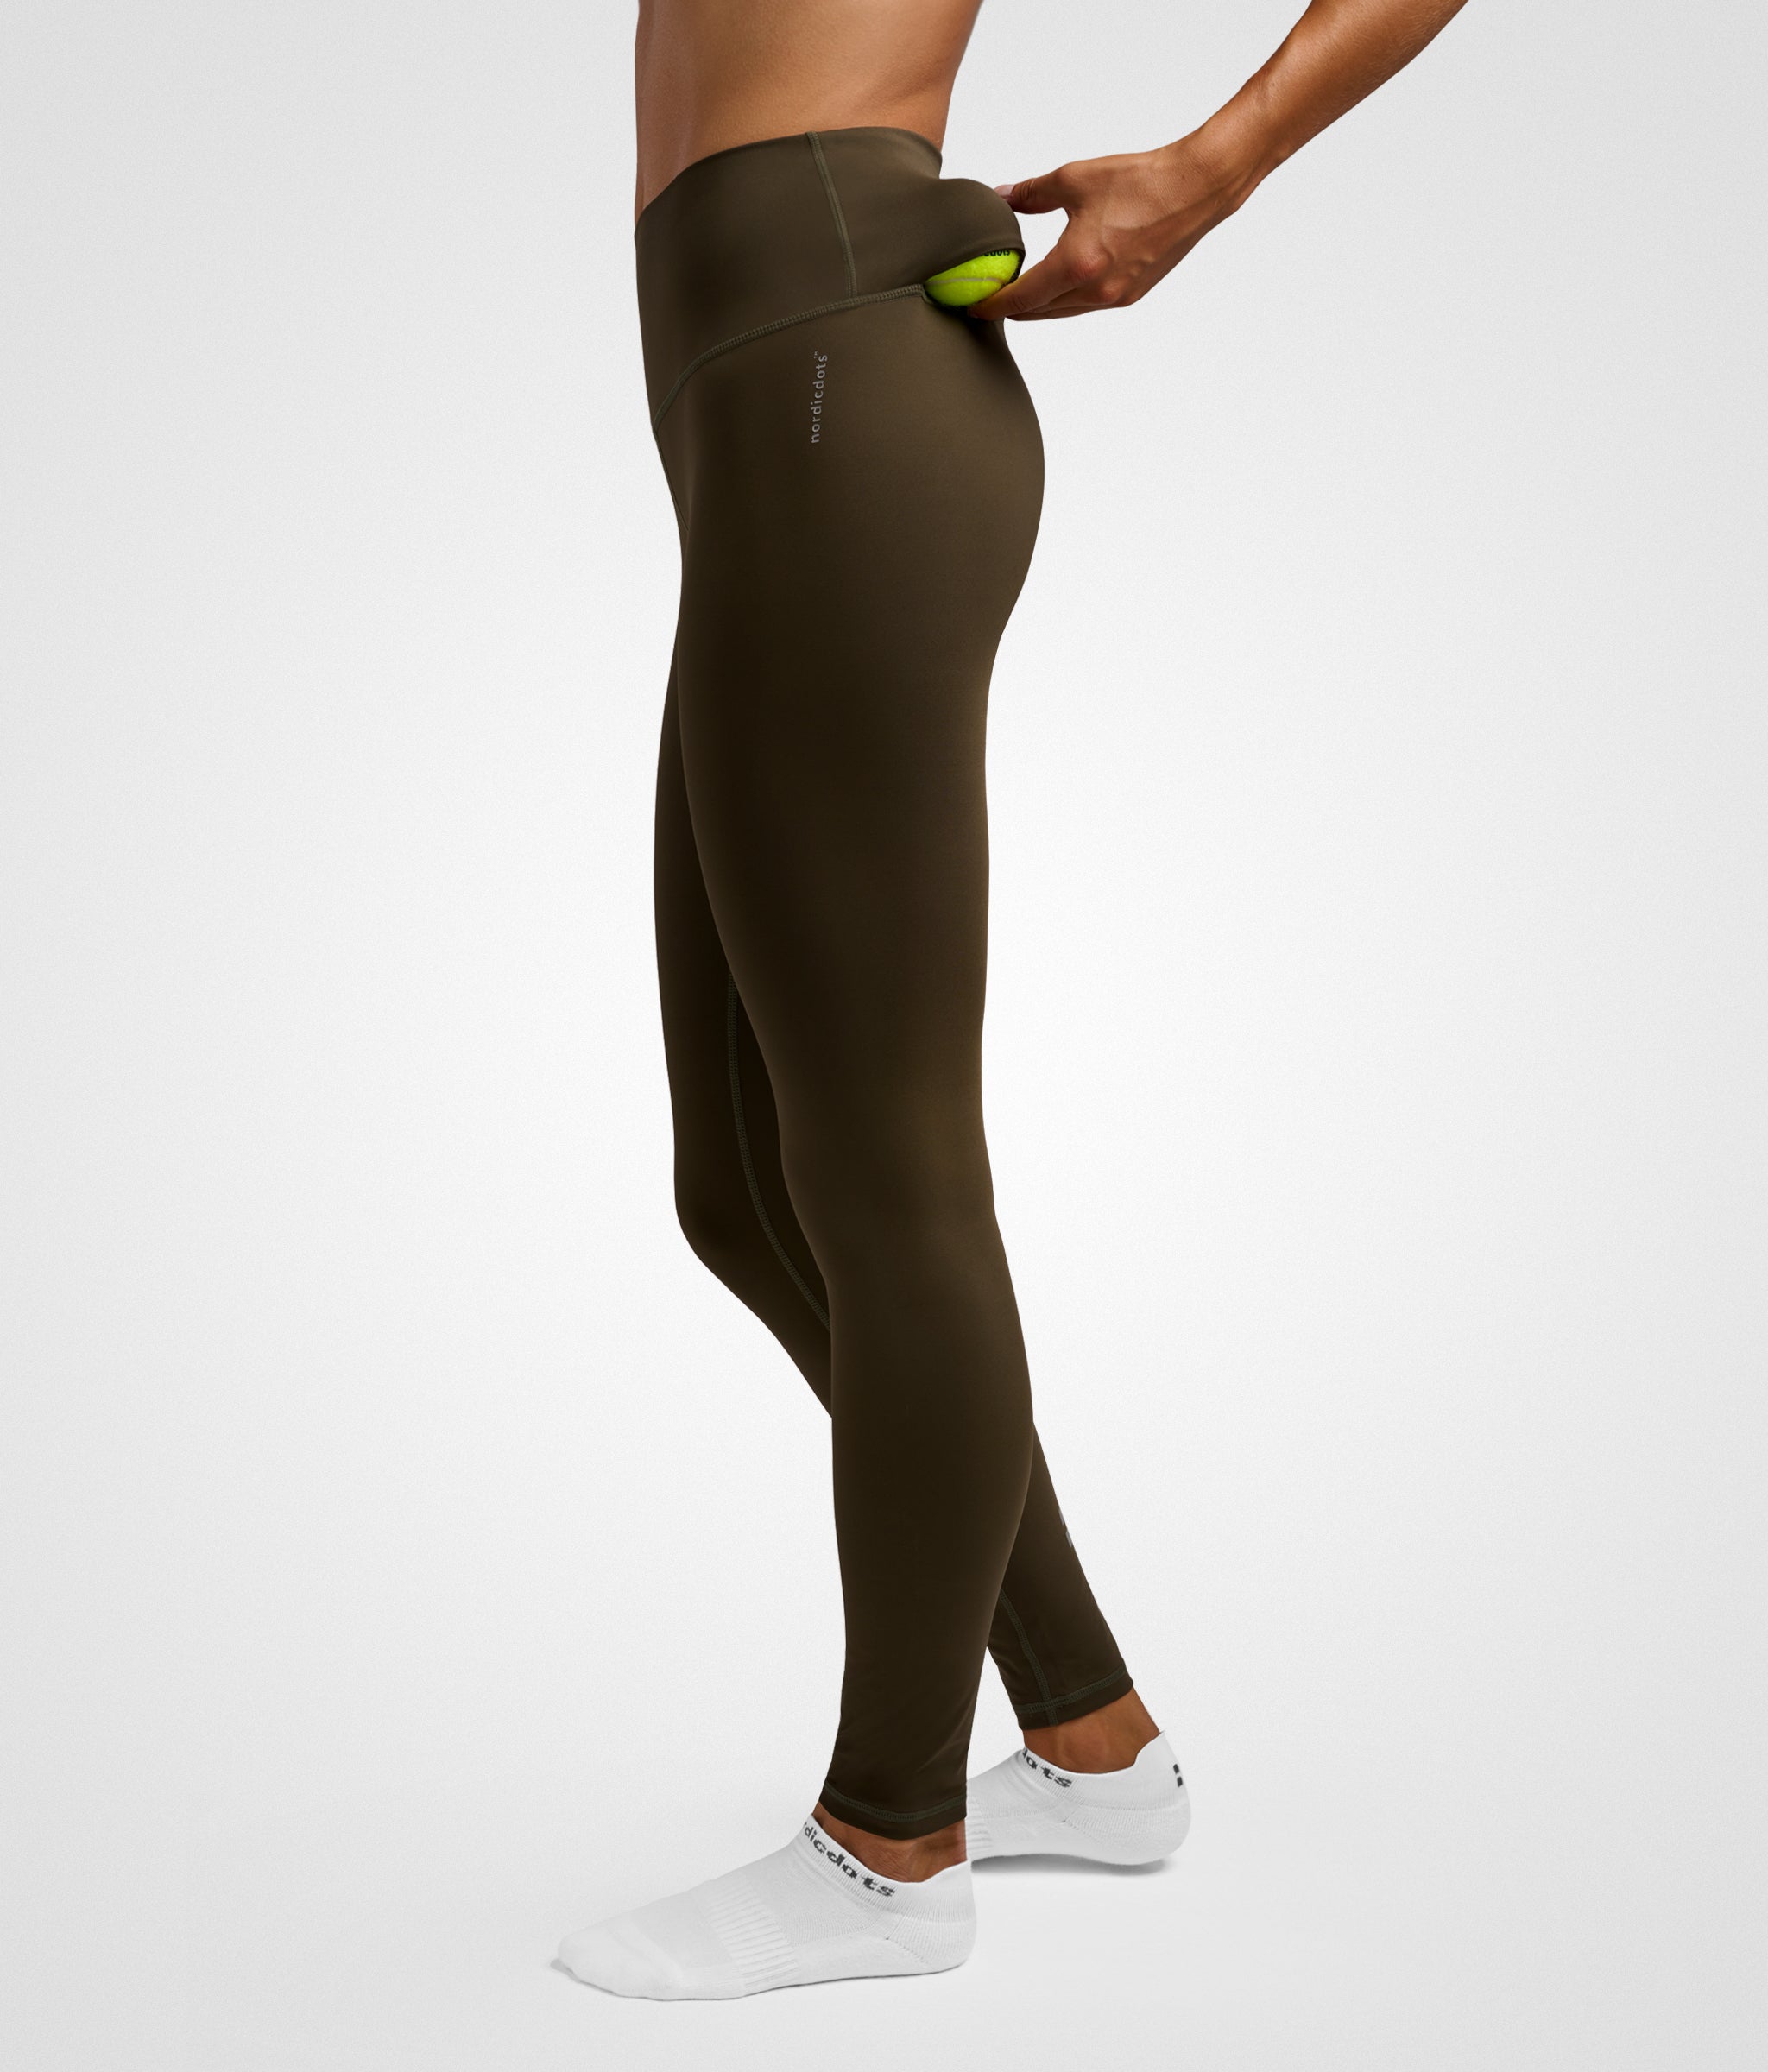 nordicdots olive green leggings tennis padel fitness workout nordicdots.com tights